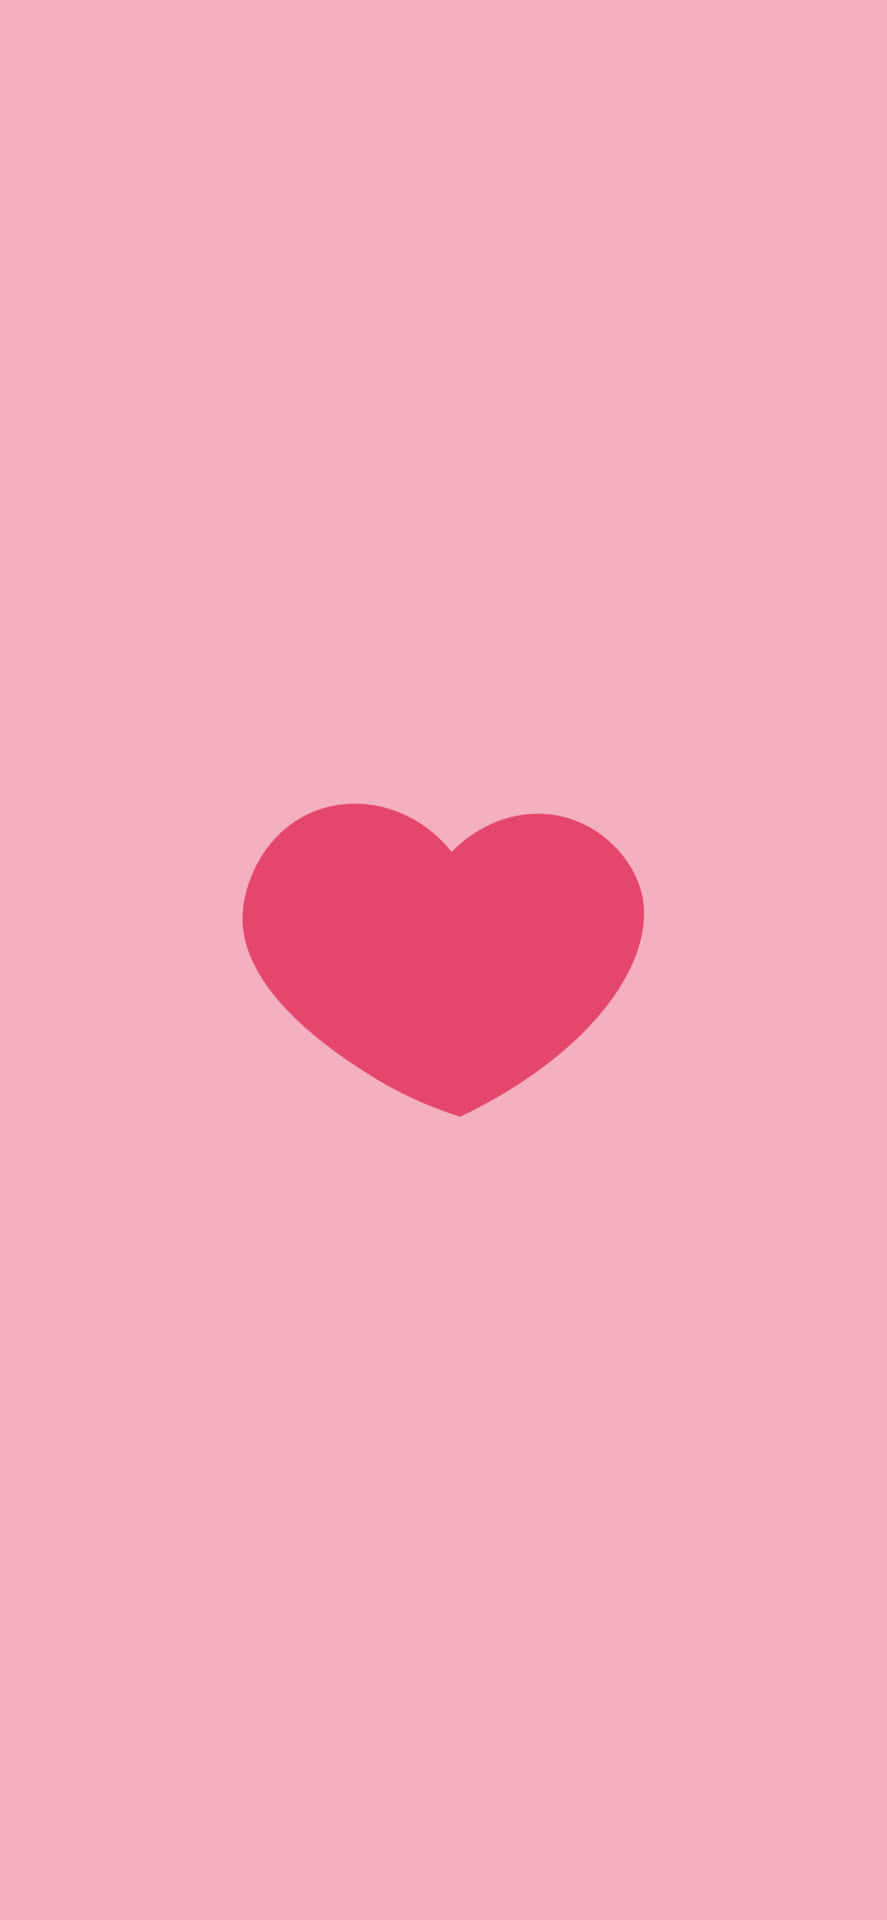 Simple Pink Heart Wallpaper